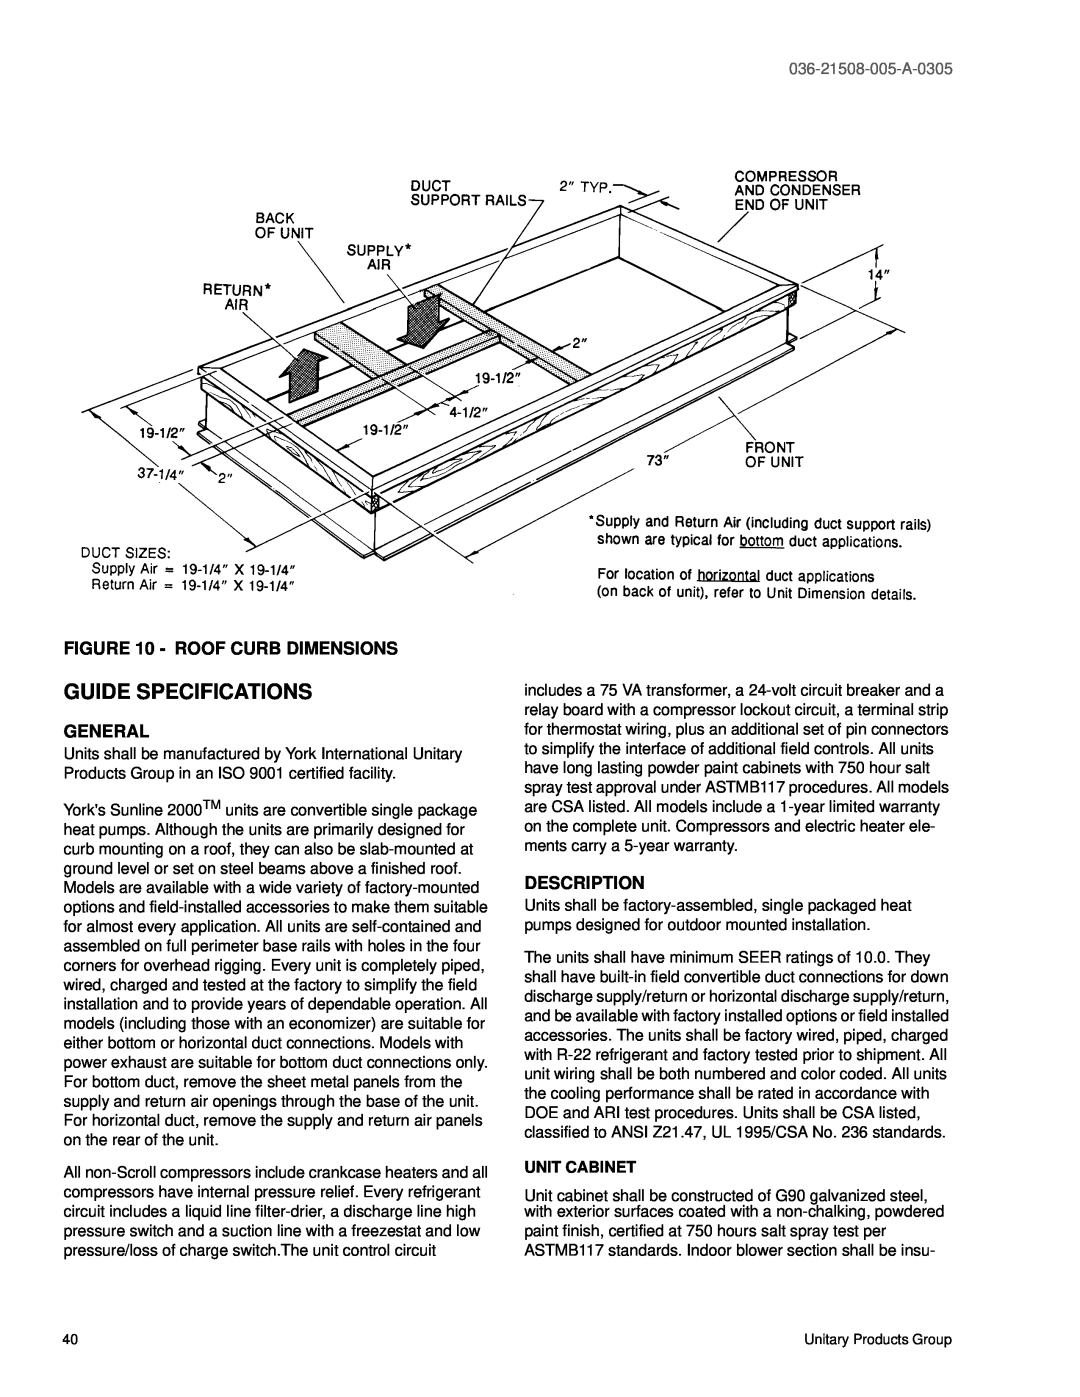 York BQ 036, BQ 060, BQ 048 warranty Guide Specifications, Roof Curb Dimensions, General, Description, 036-21508-005-A-0305 